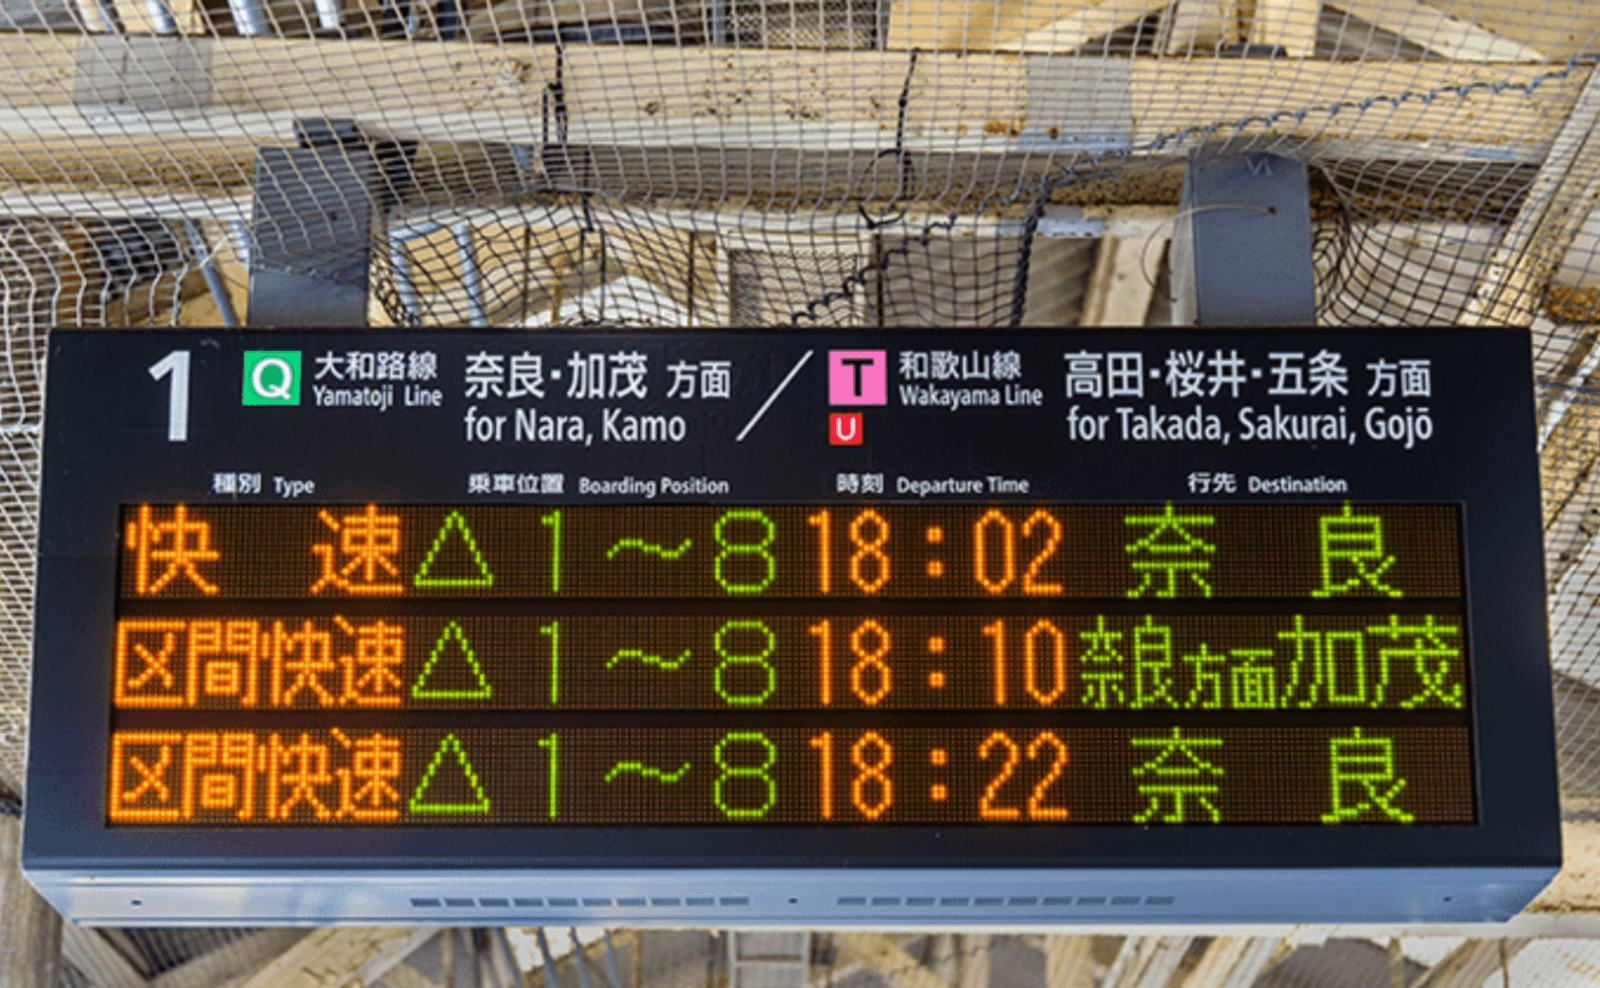 japanese-train-departure-board.png